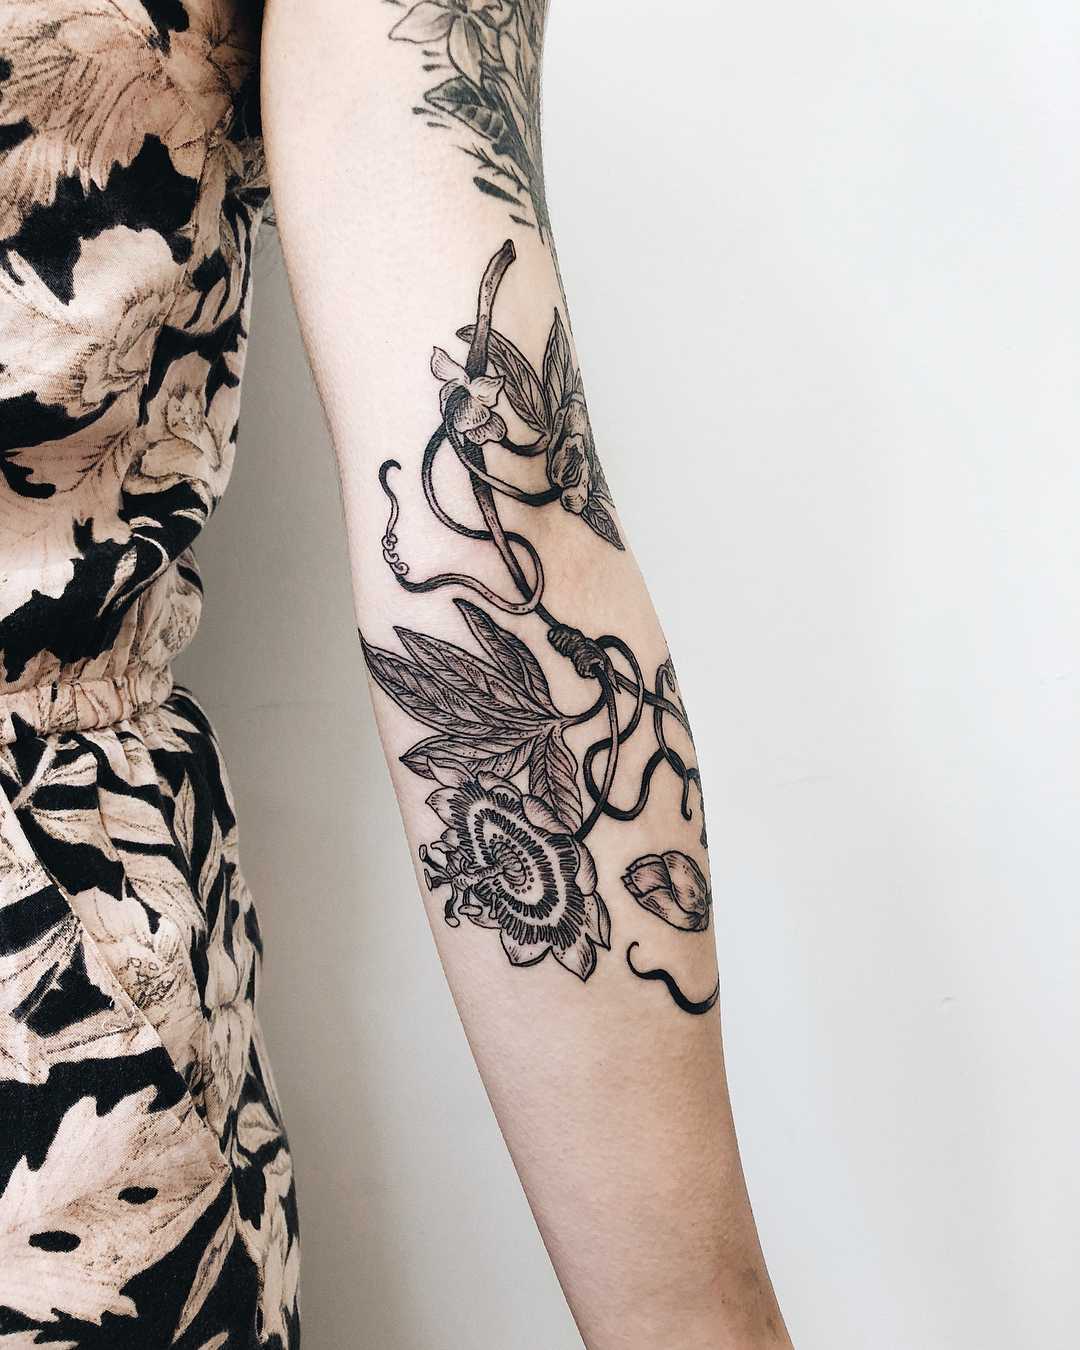 Passion flower tattoo by Finley Jordan